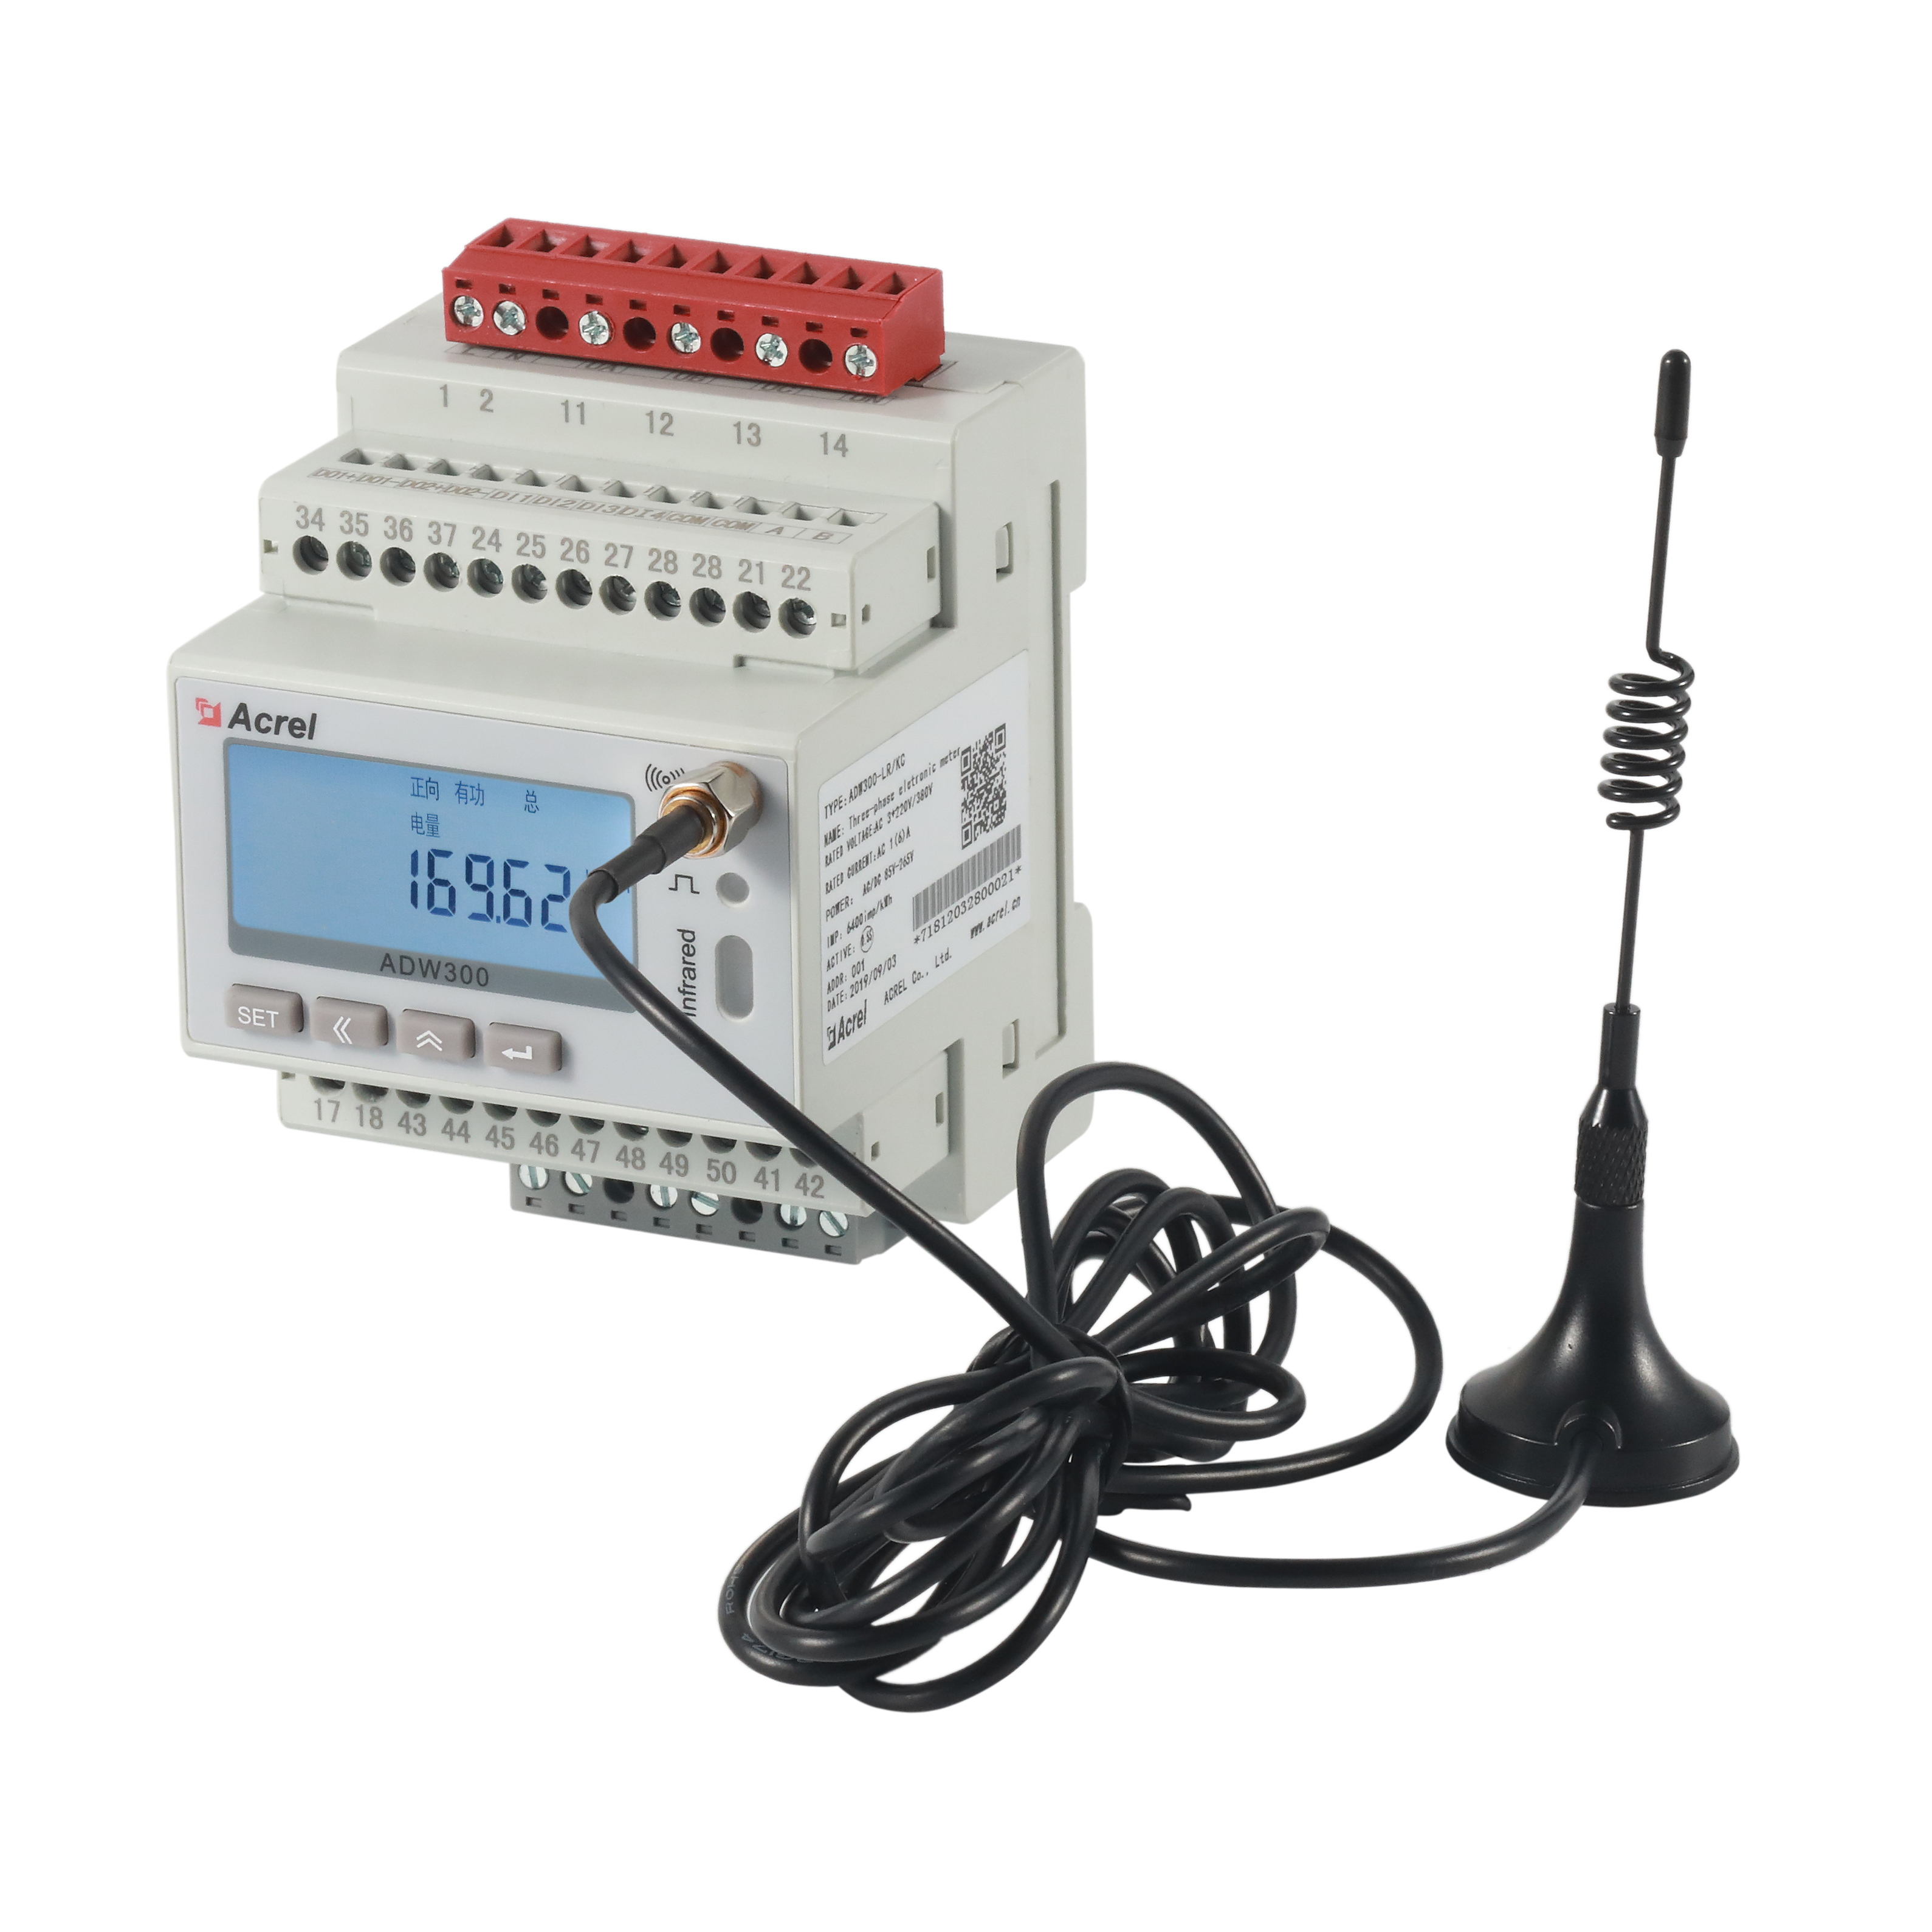 ADW300 IoT Wireless Power Meter